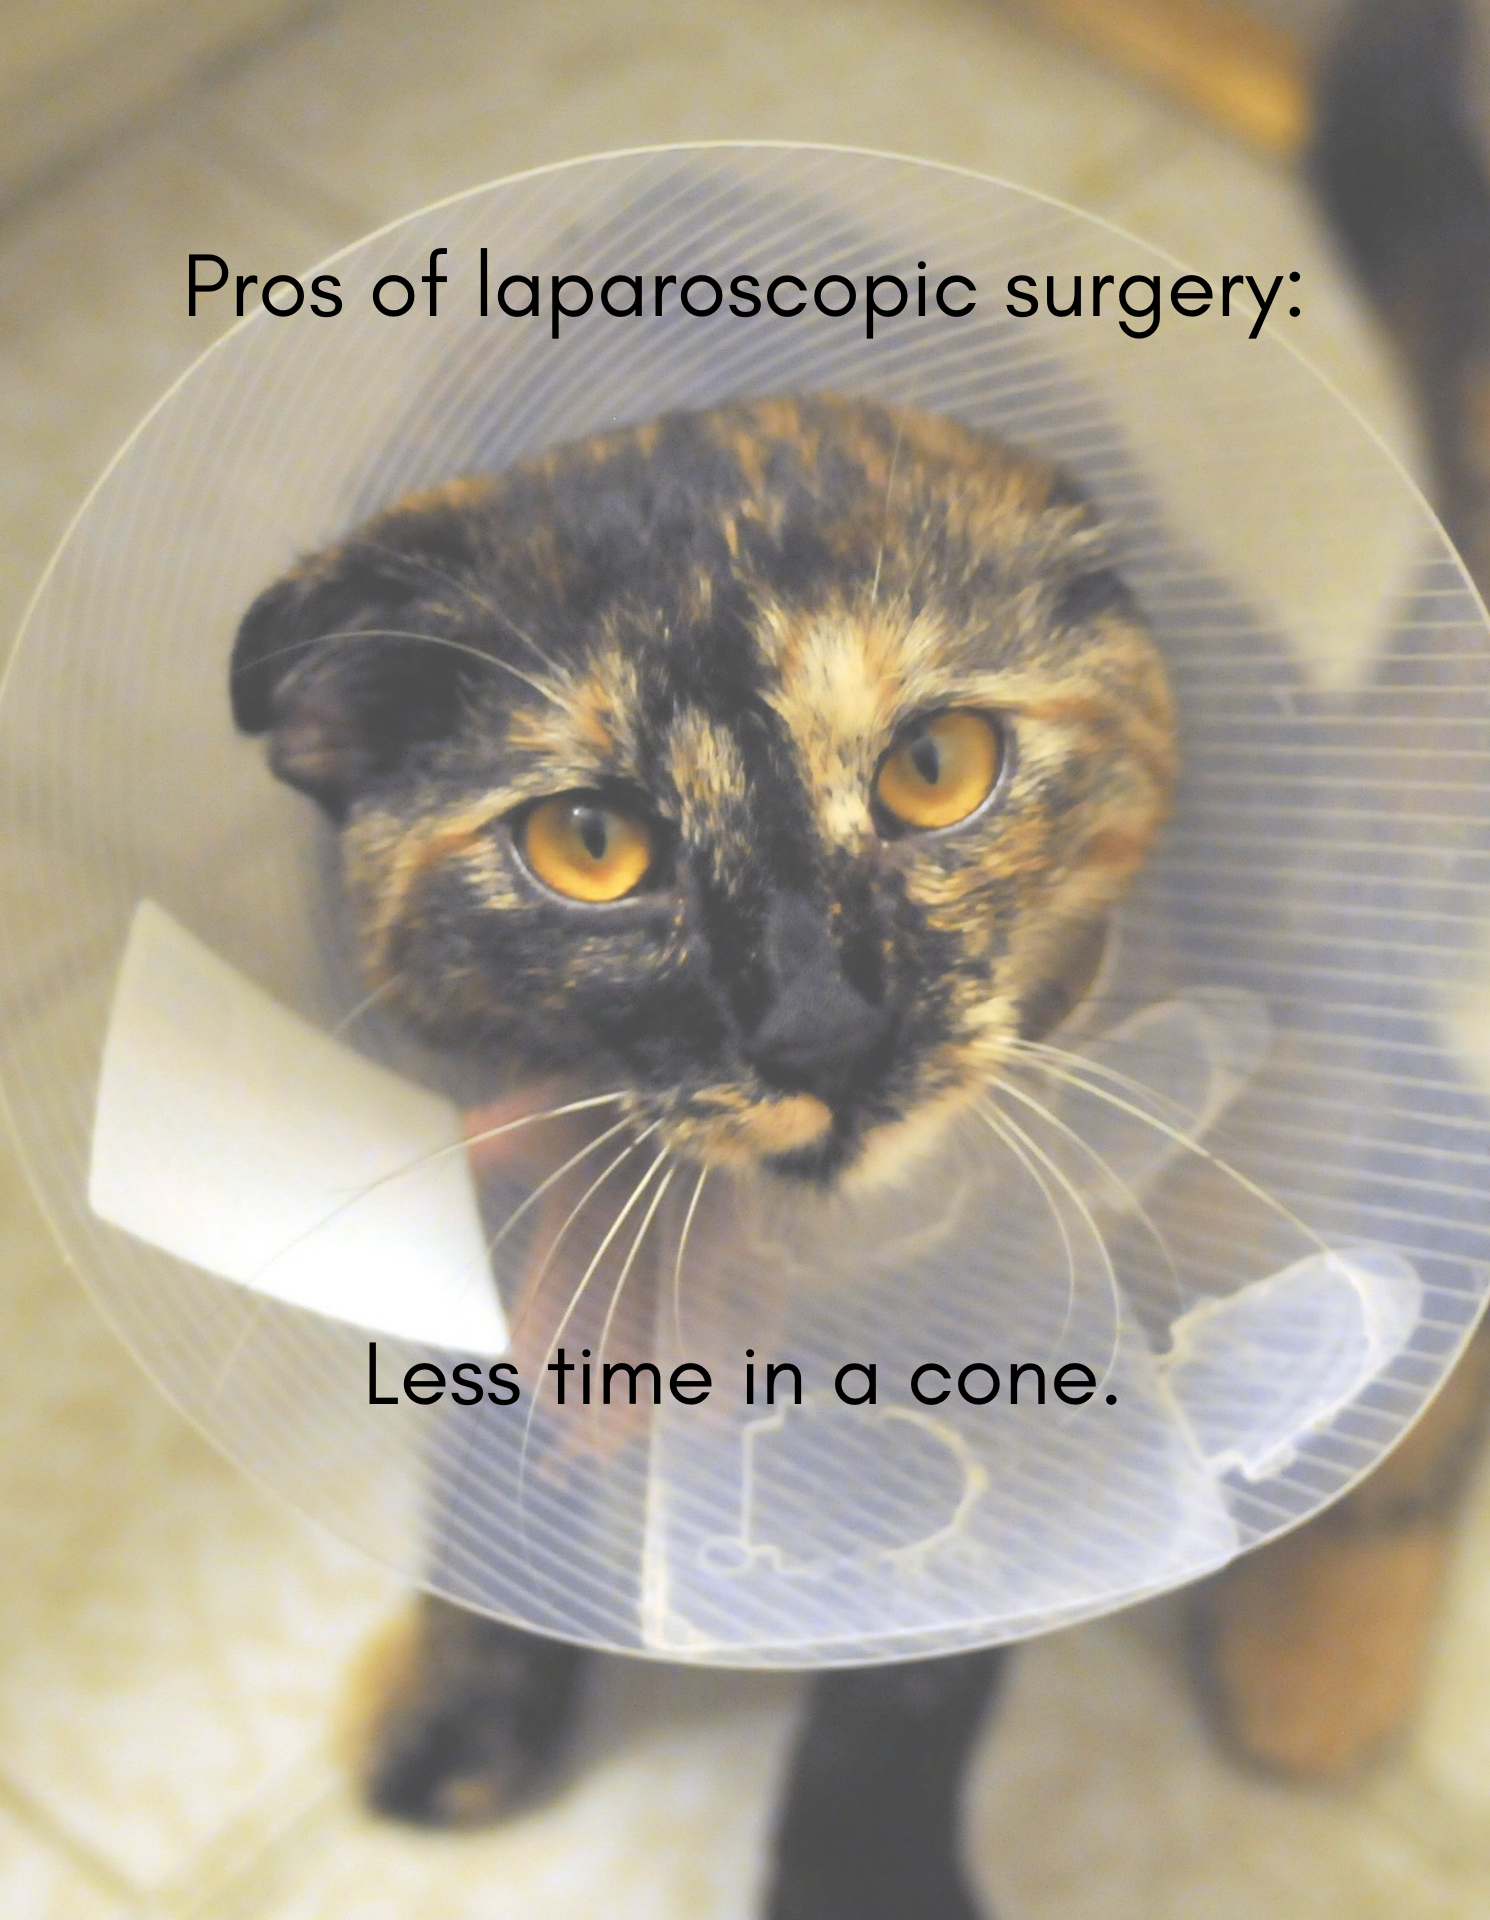 Laparoscopic surgery has many advantages, including a quicker recovery.